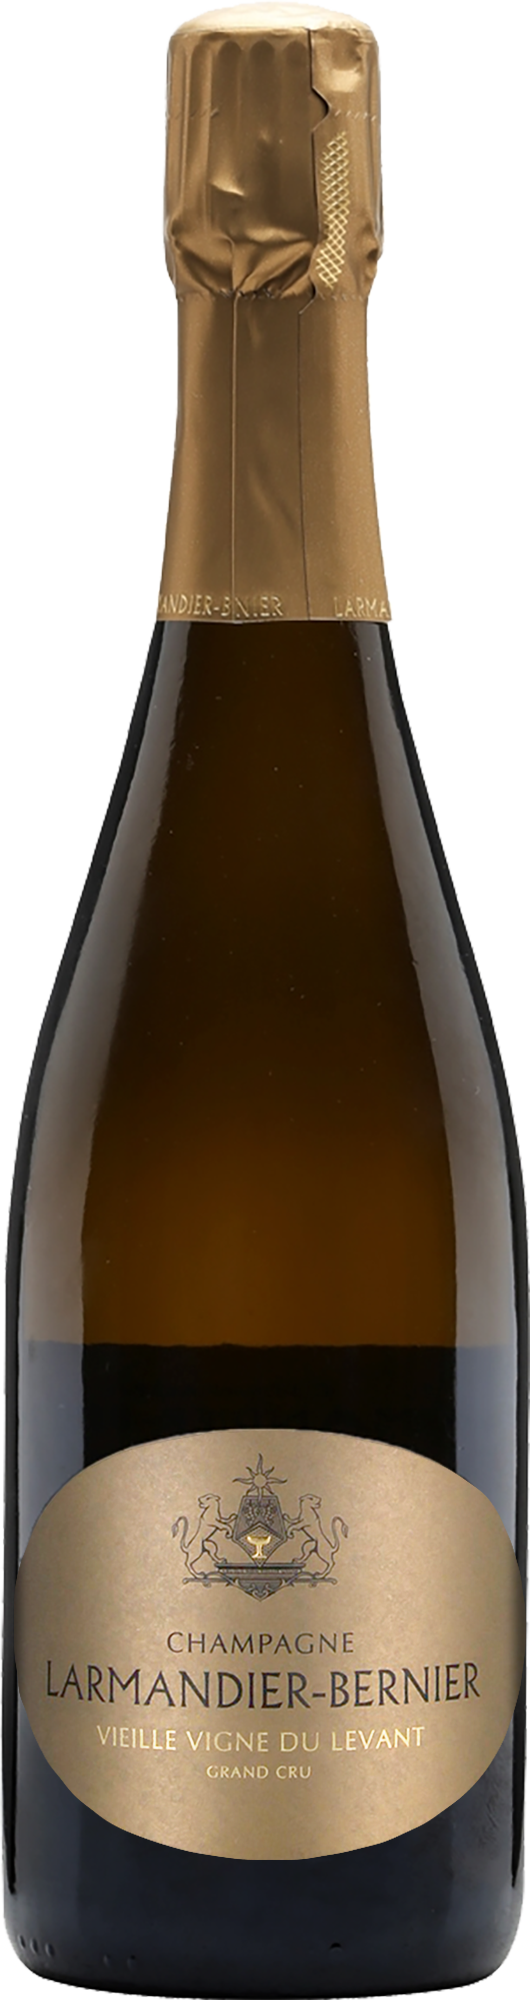 Champagne Larmandier-Bernier Grand Cru Vieille Vigne du Levant 2011 (Disg. Nov 2020)